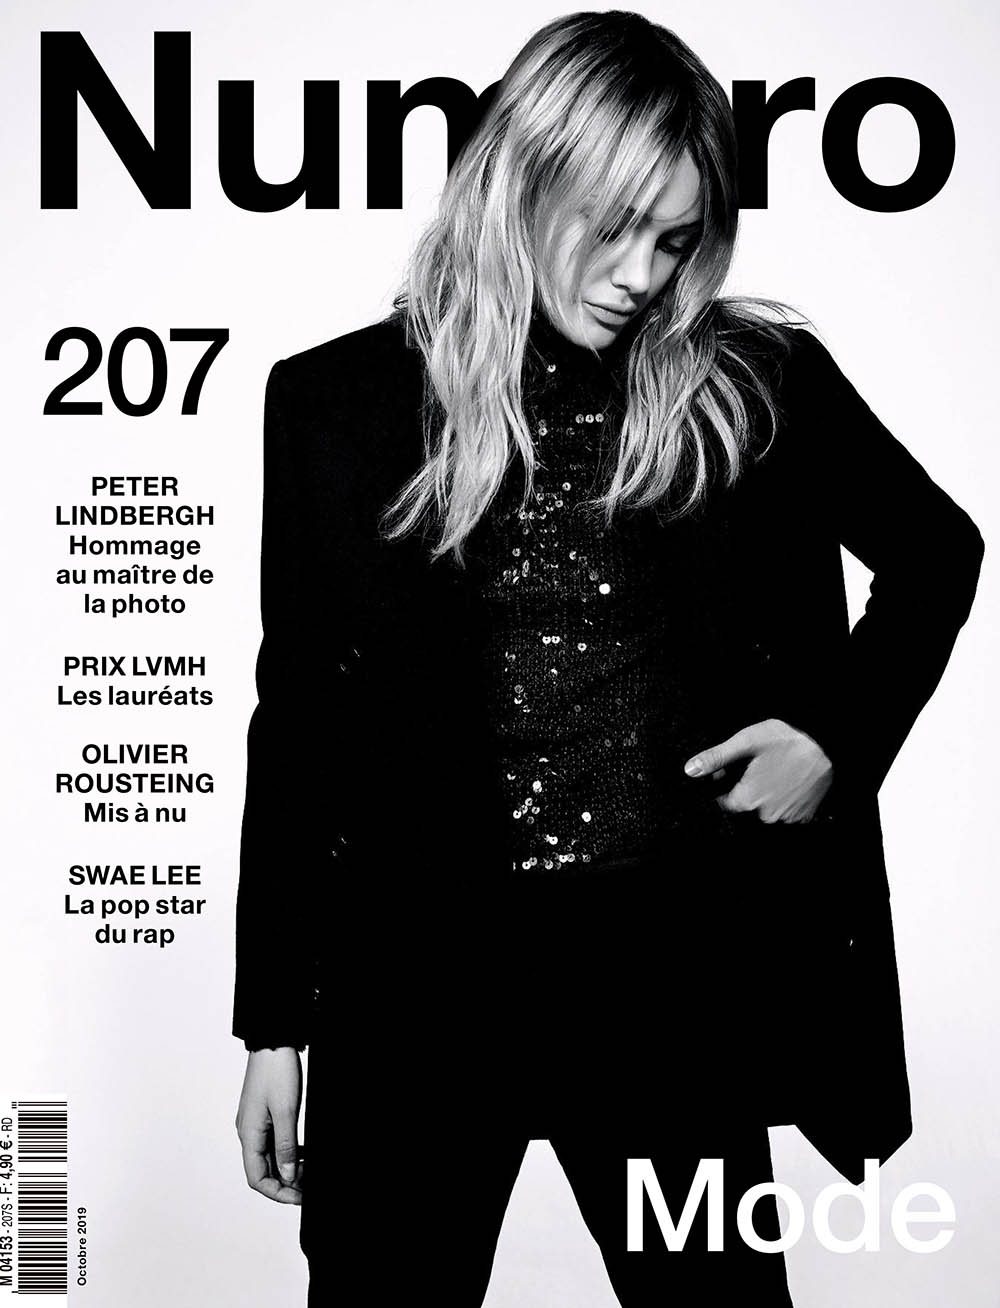 Simona Kust covers Numéro October 2019 by Jean-Baptiste Mondino